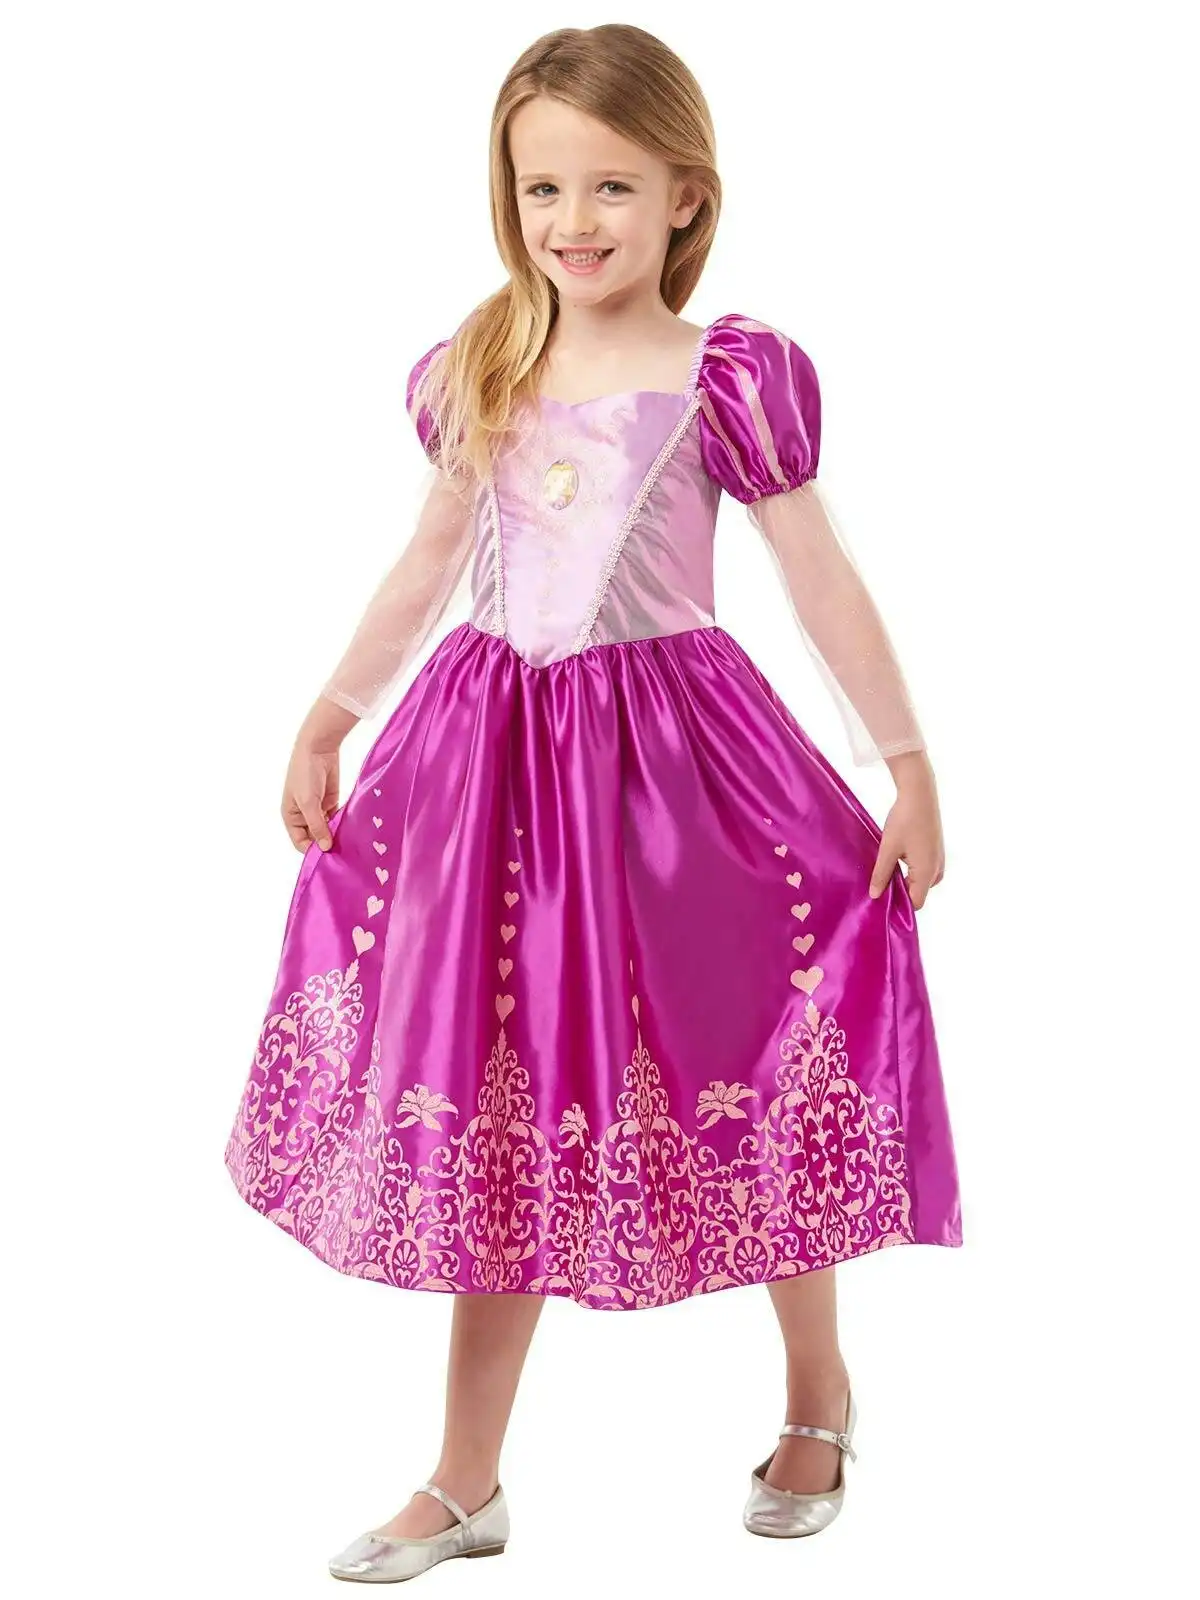 Disney Rapunzel Gem Princess Dress Up Party Costume Kids/Girls/Children Size 4-6